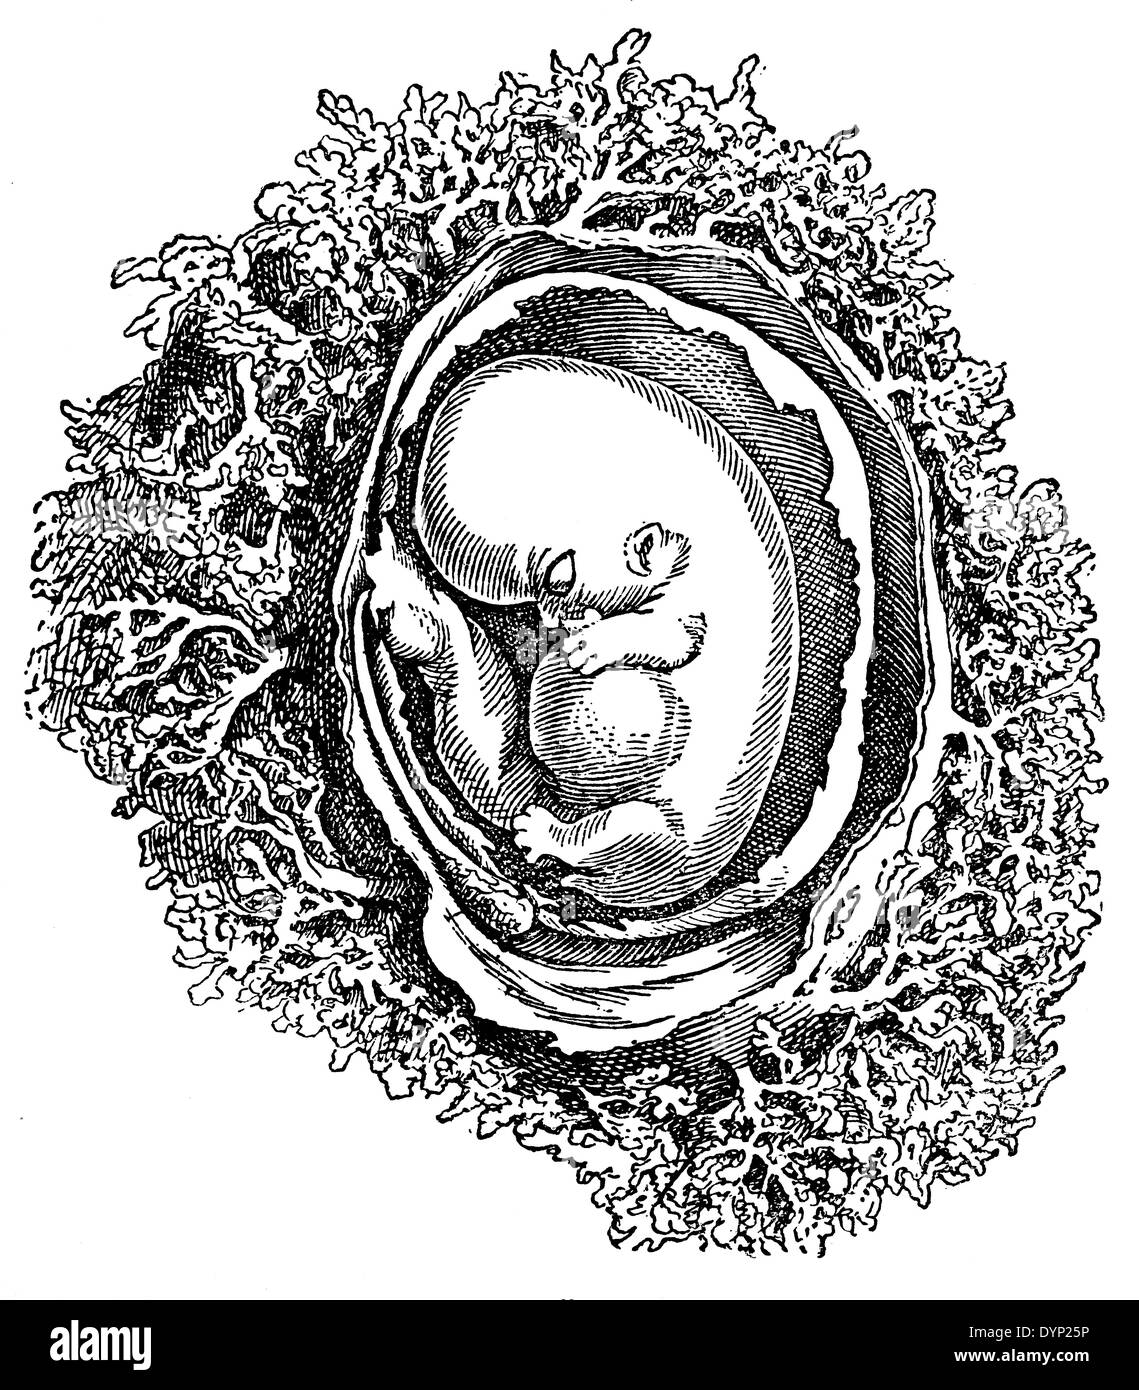 6 week human fetus, illustration from Soviet encyclopedia, 1927 Stock Photo